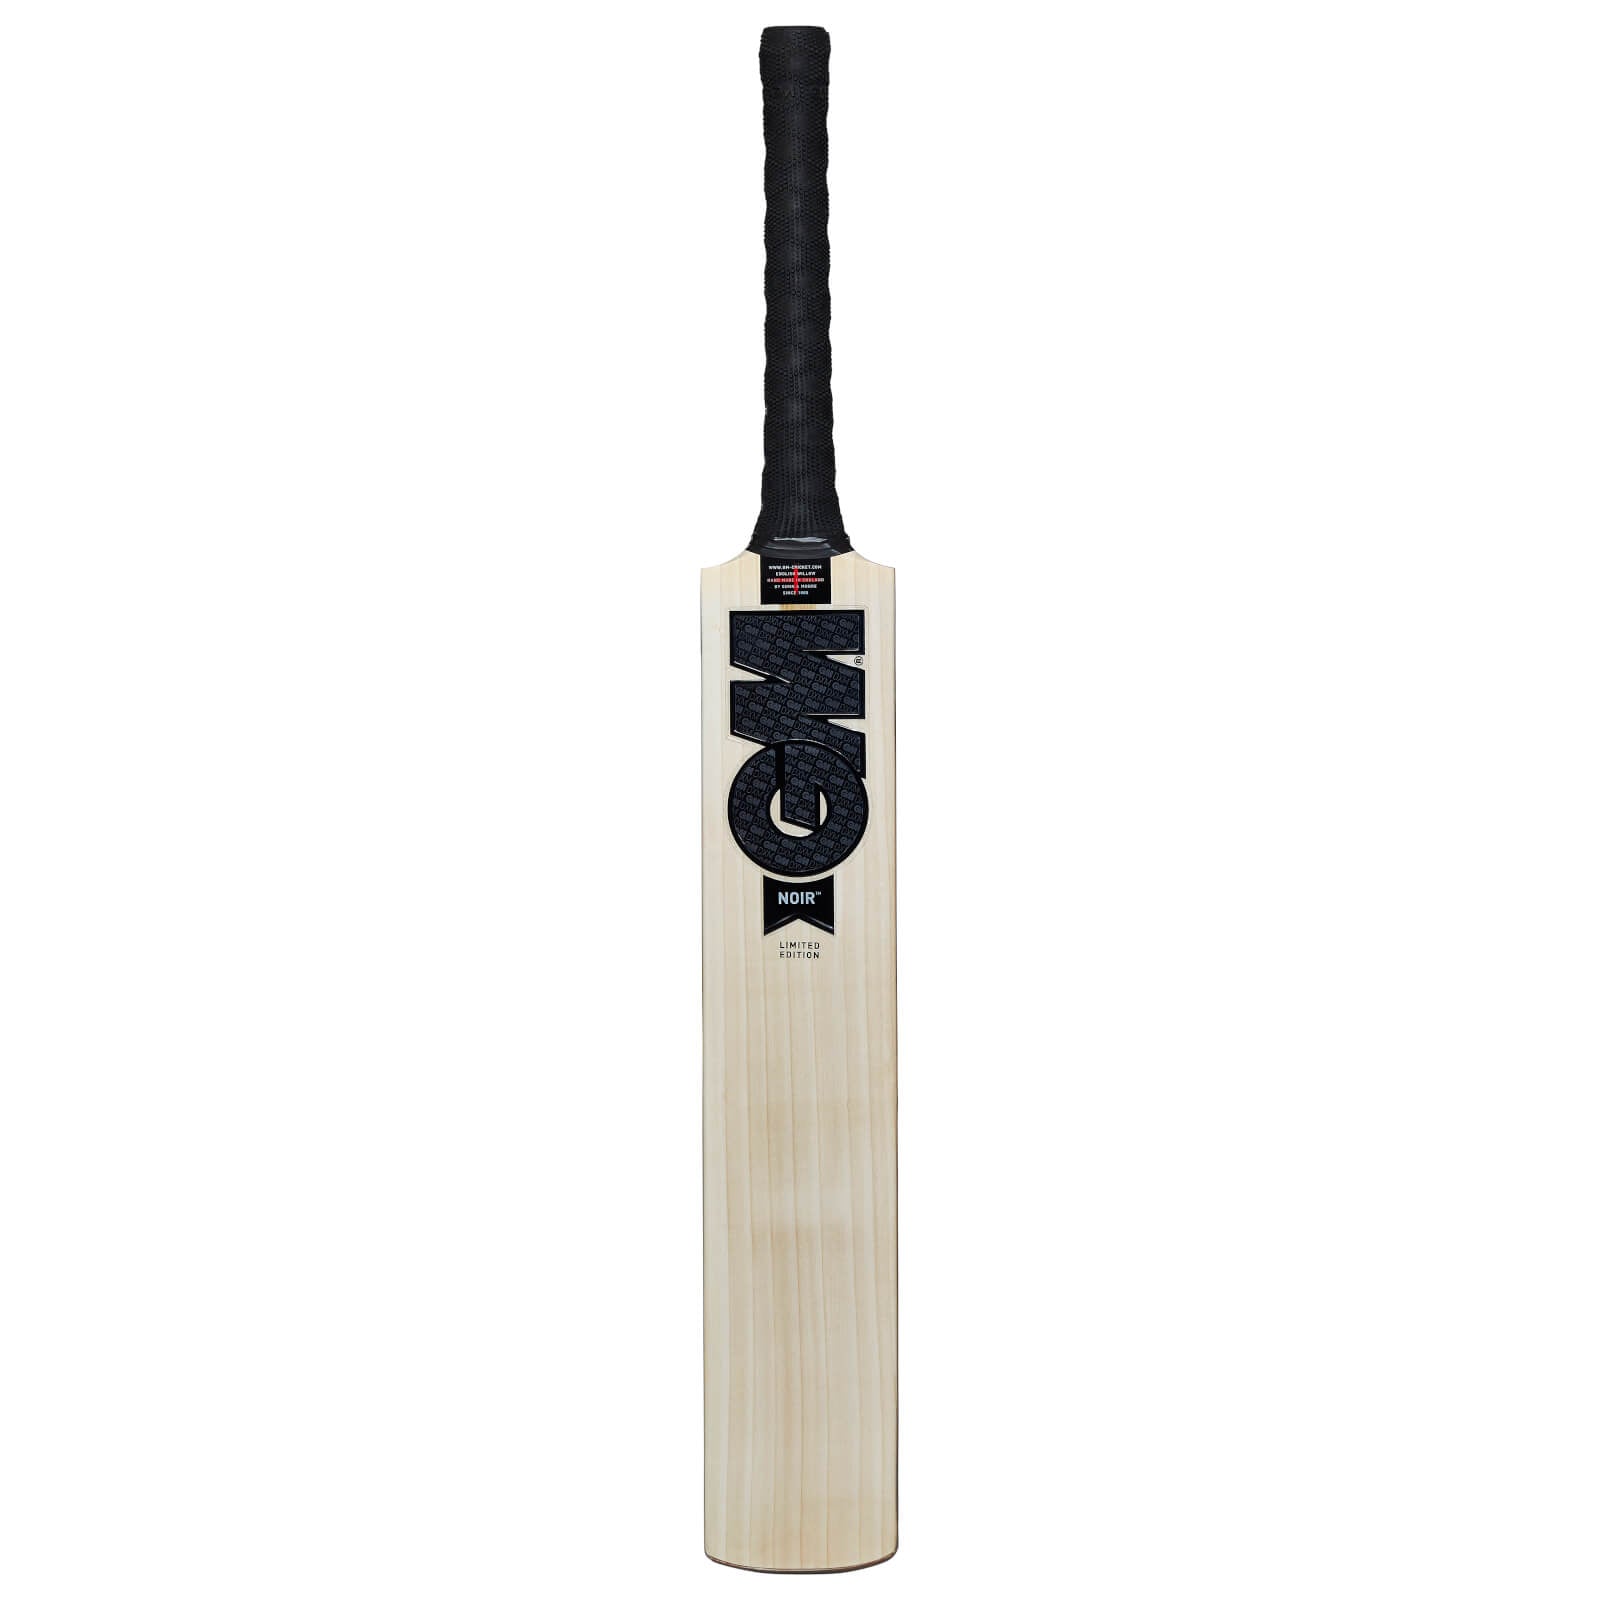 Cricket Bat Gunn & Moore Noir DXM 909 Short Handle